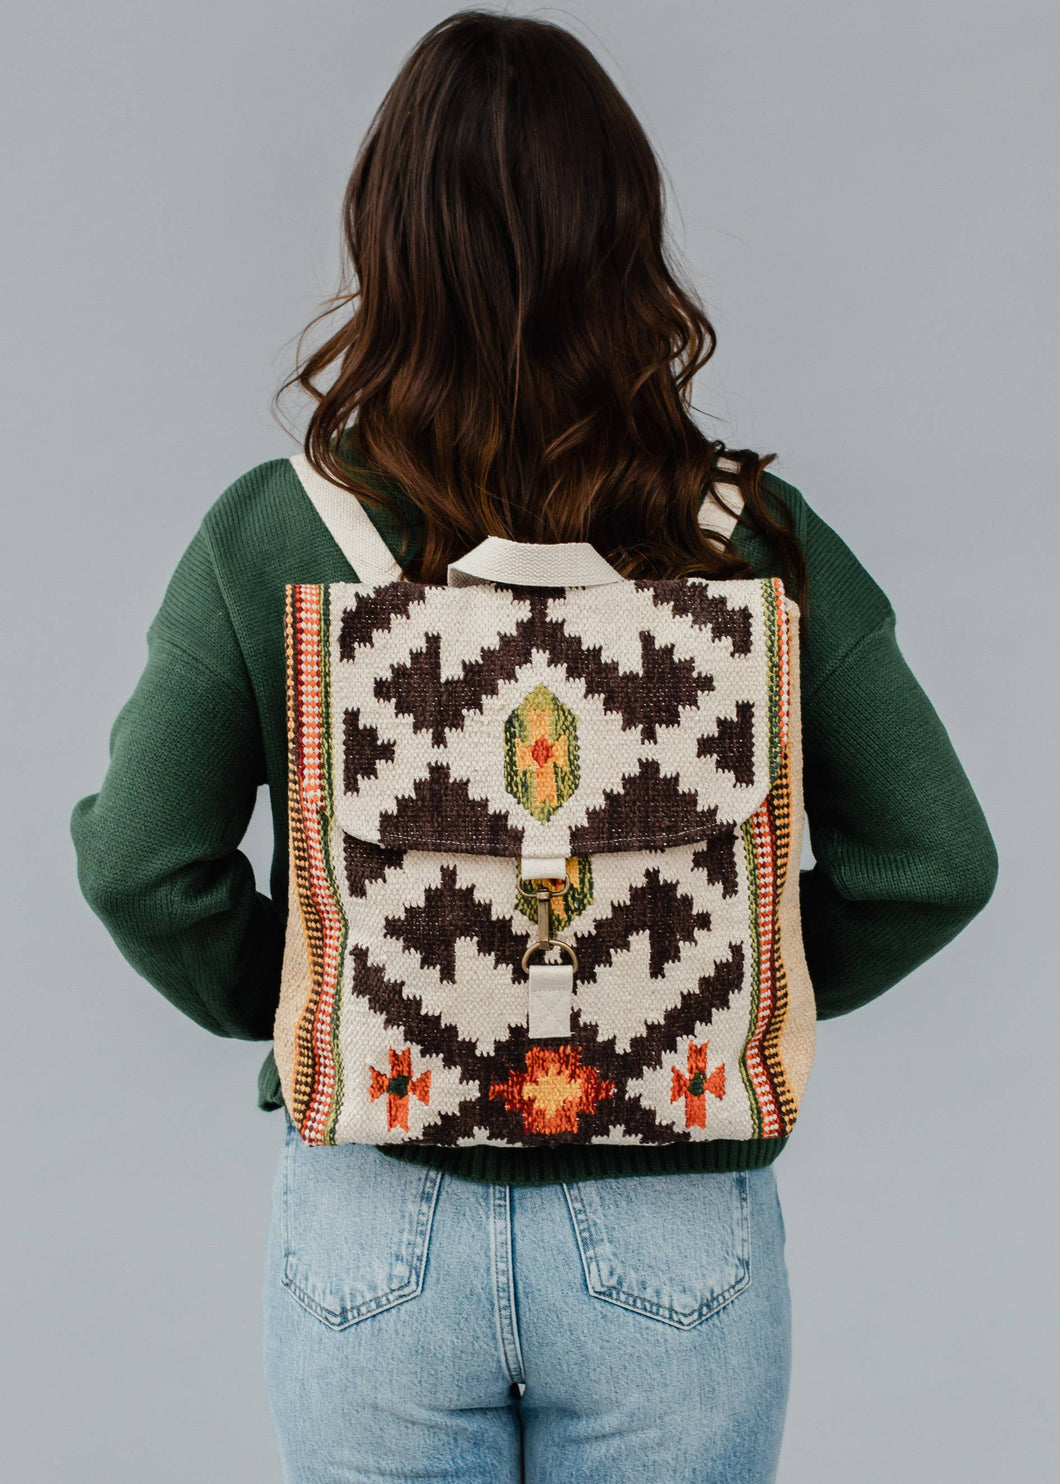 Tan & Brown Aztec Backpack